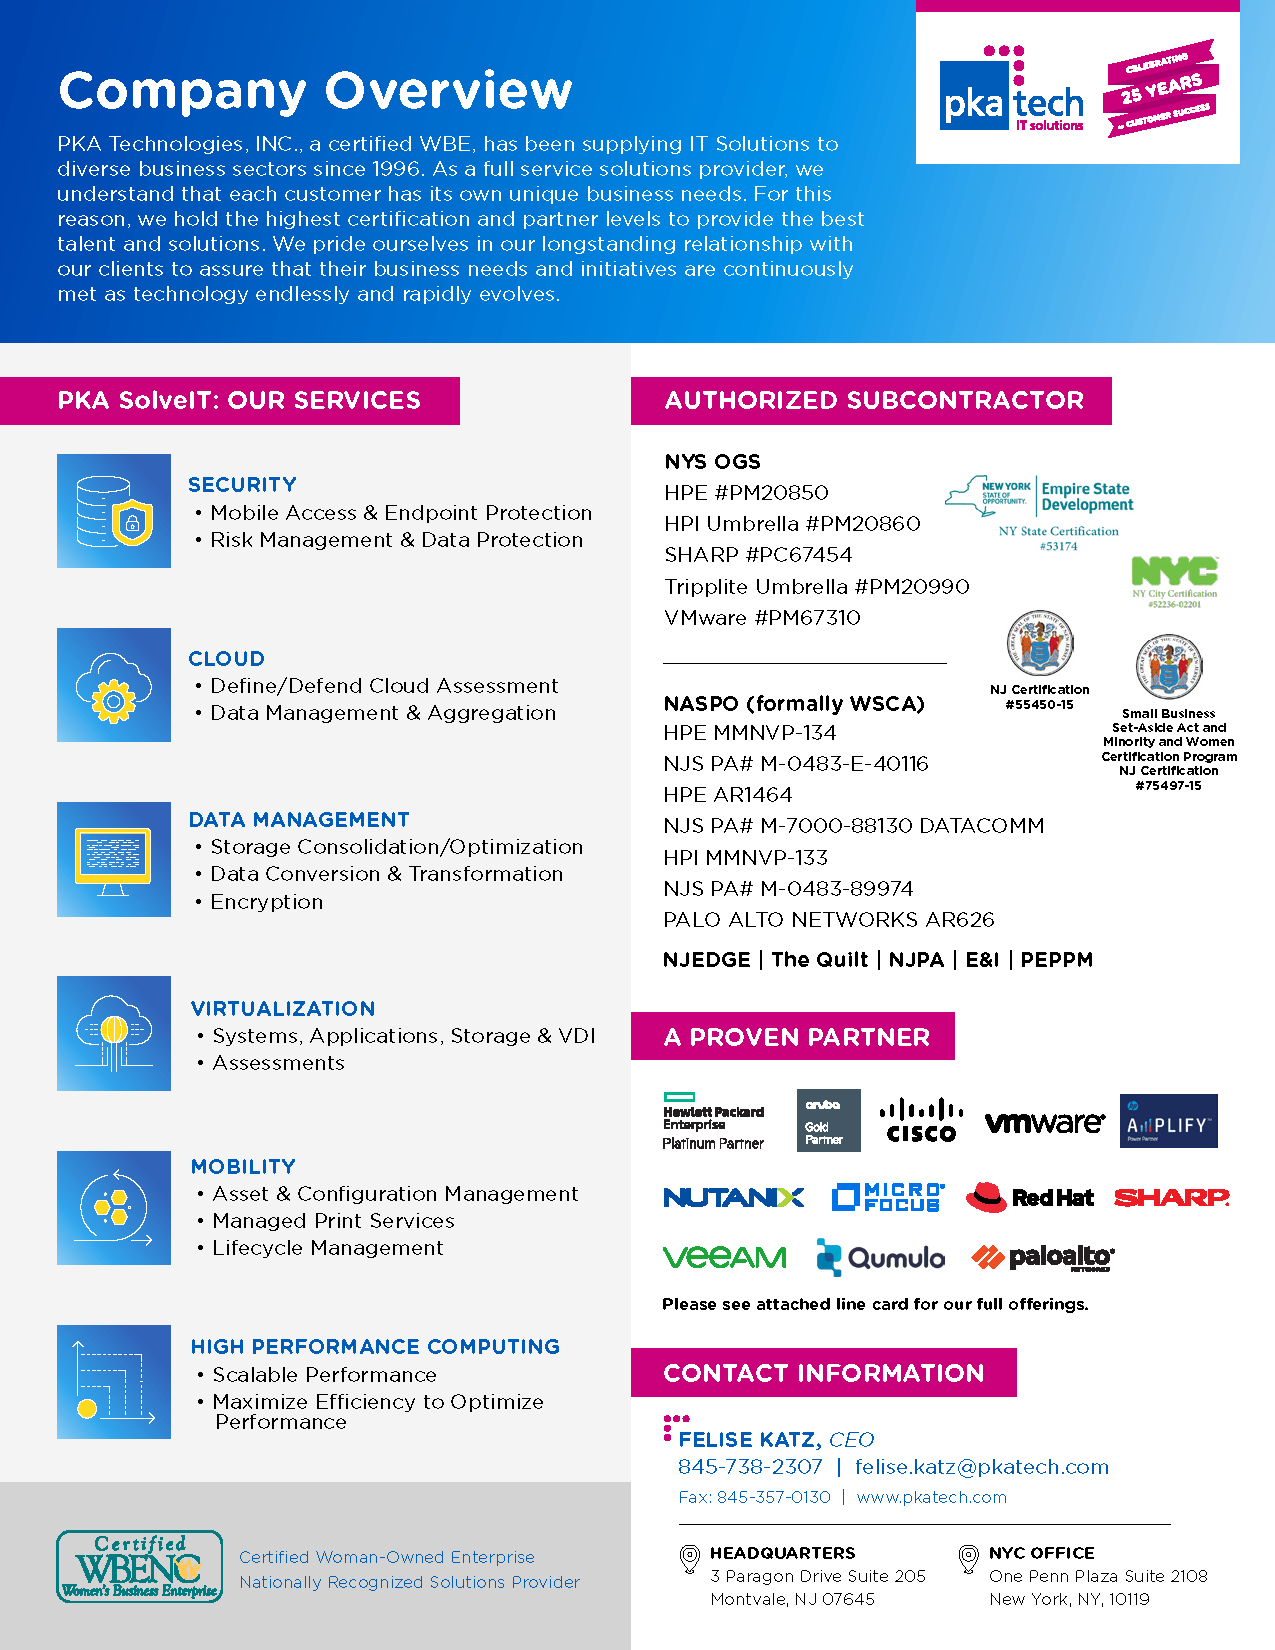 PKA Company Overview